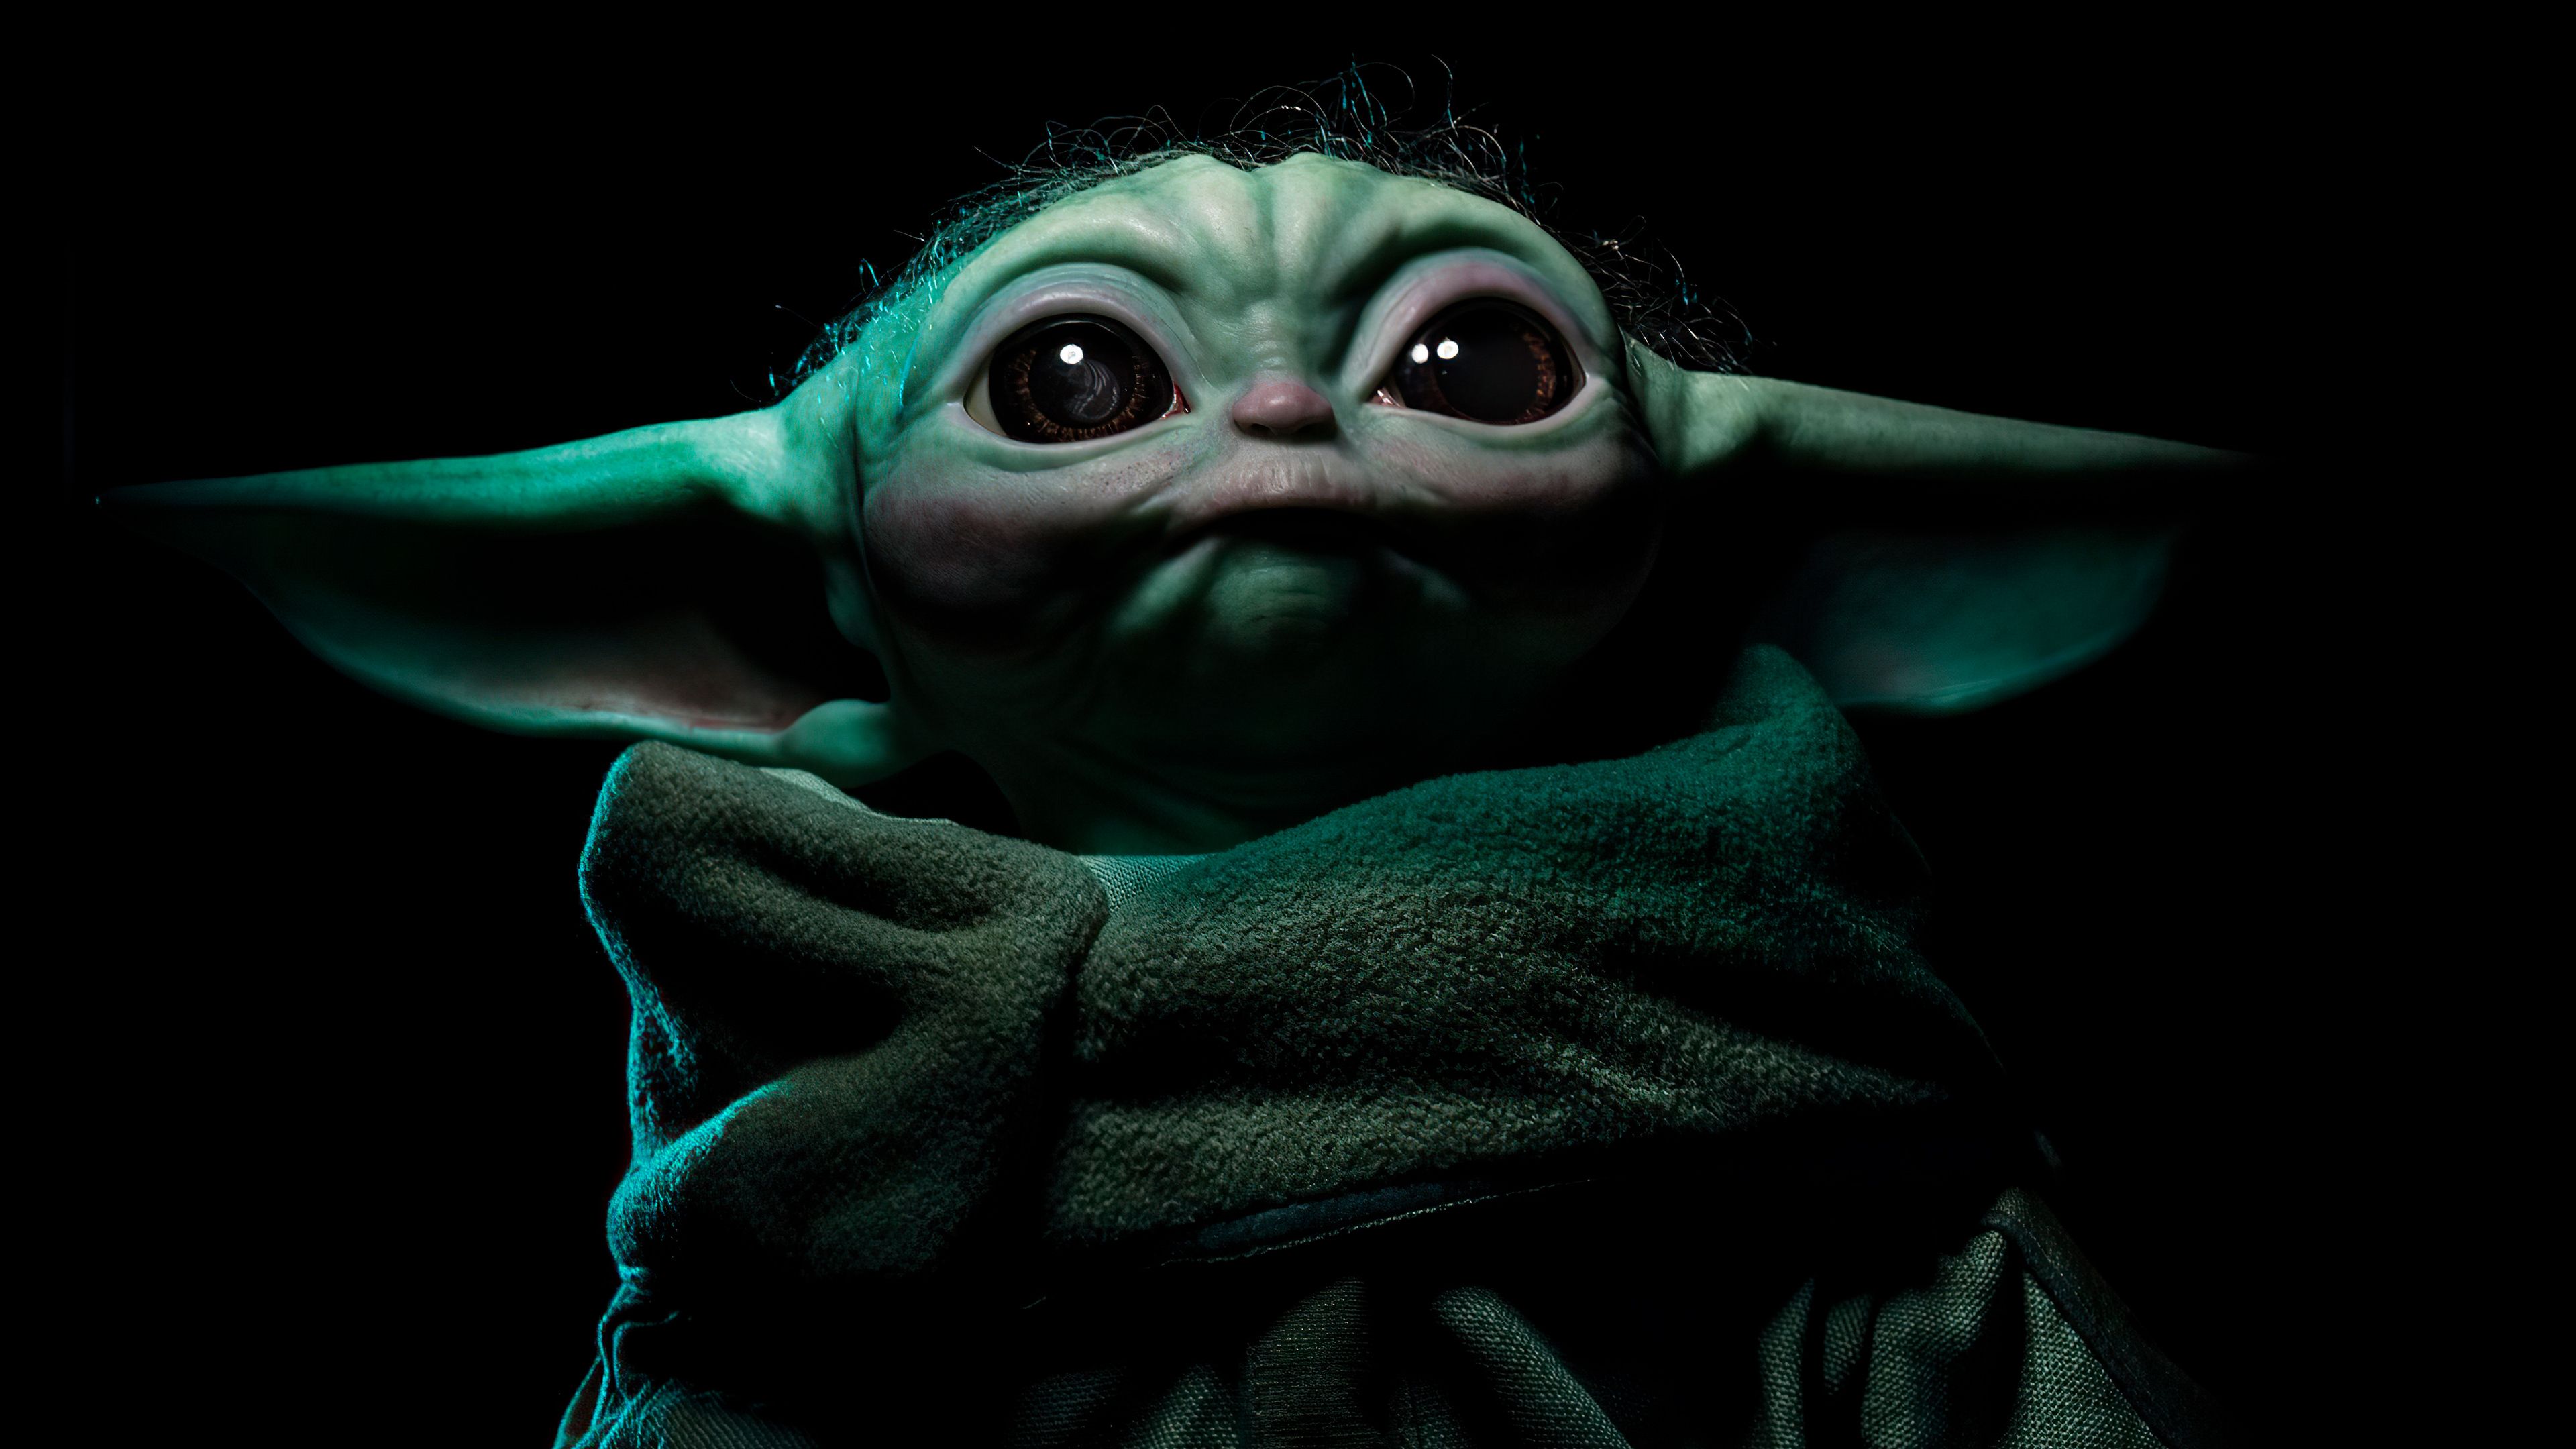  Baby Yoda Hintergrundbild 3840x2160. The Mandalorian Baby Yoda 4k, HD Tv Shows, 4k Wallpaper, Image, Background, Photo and Picture